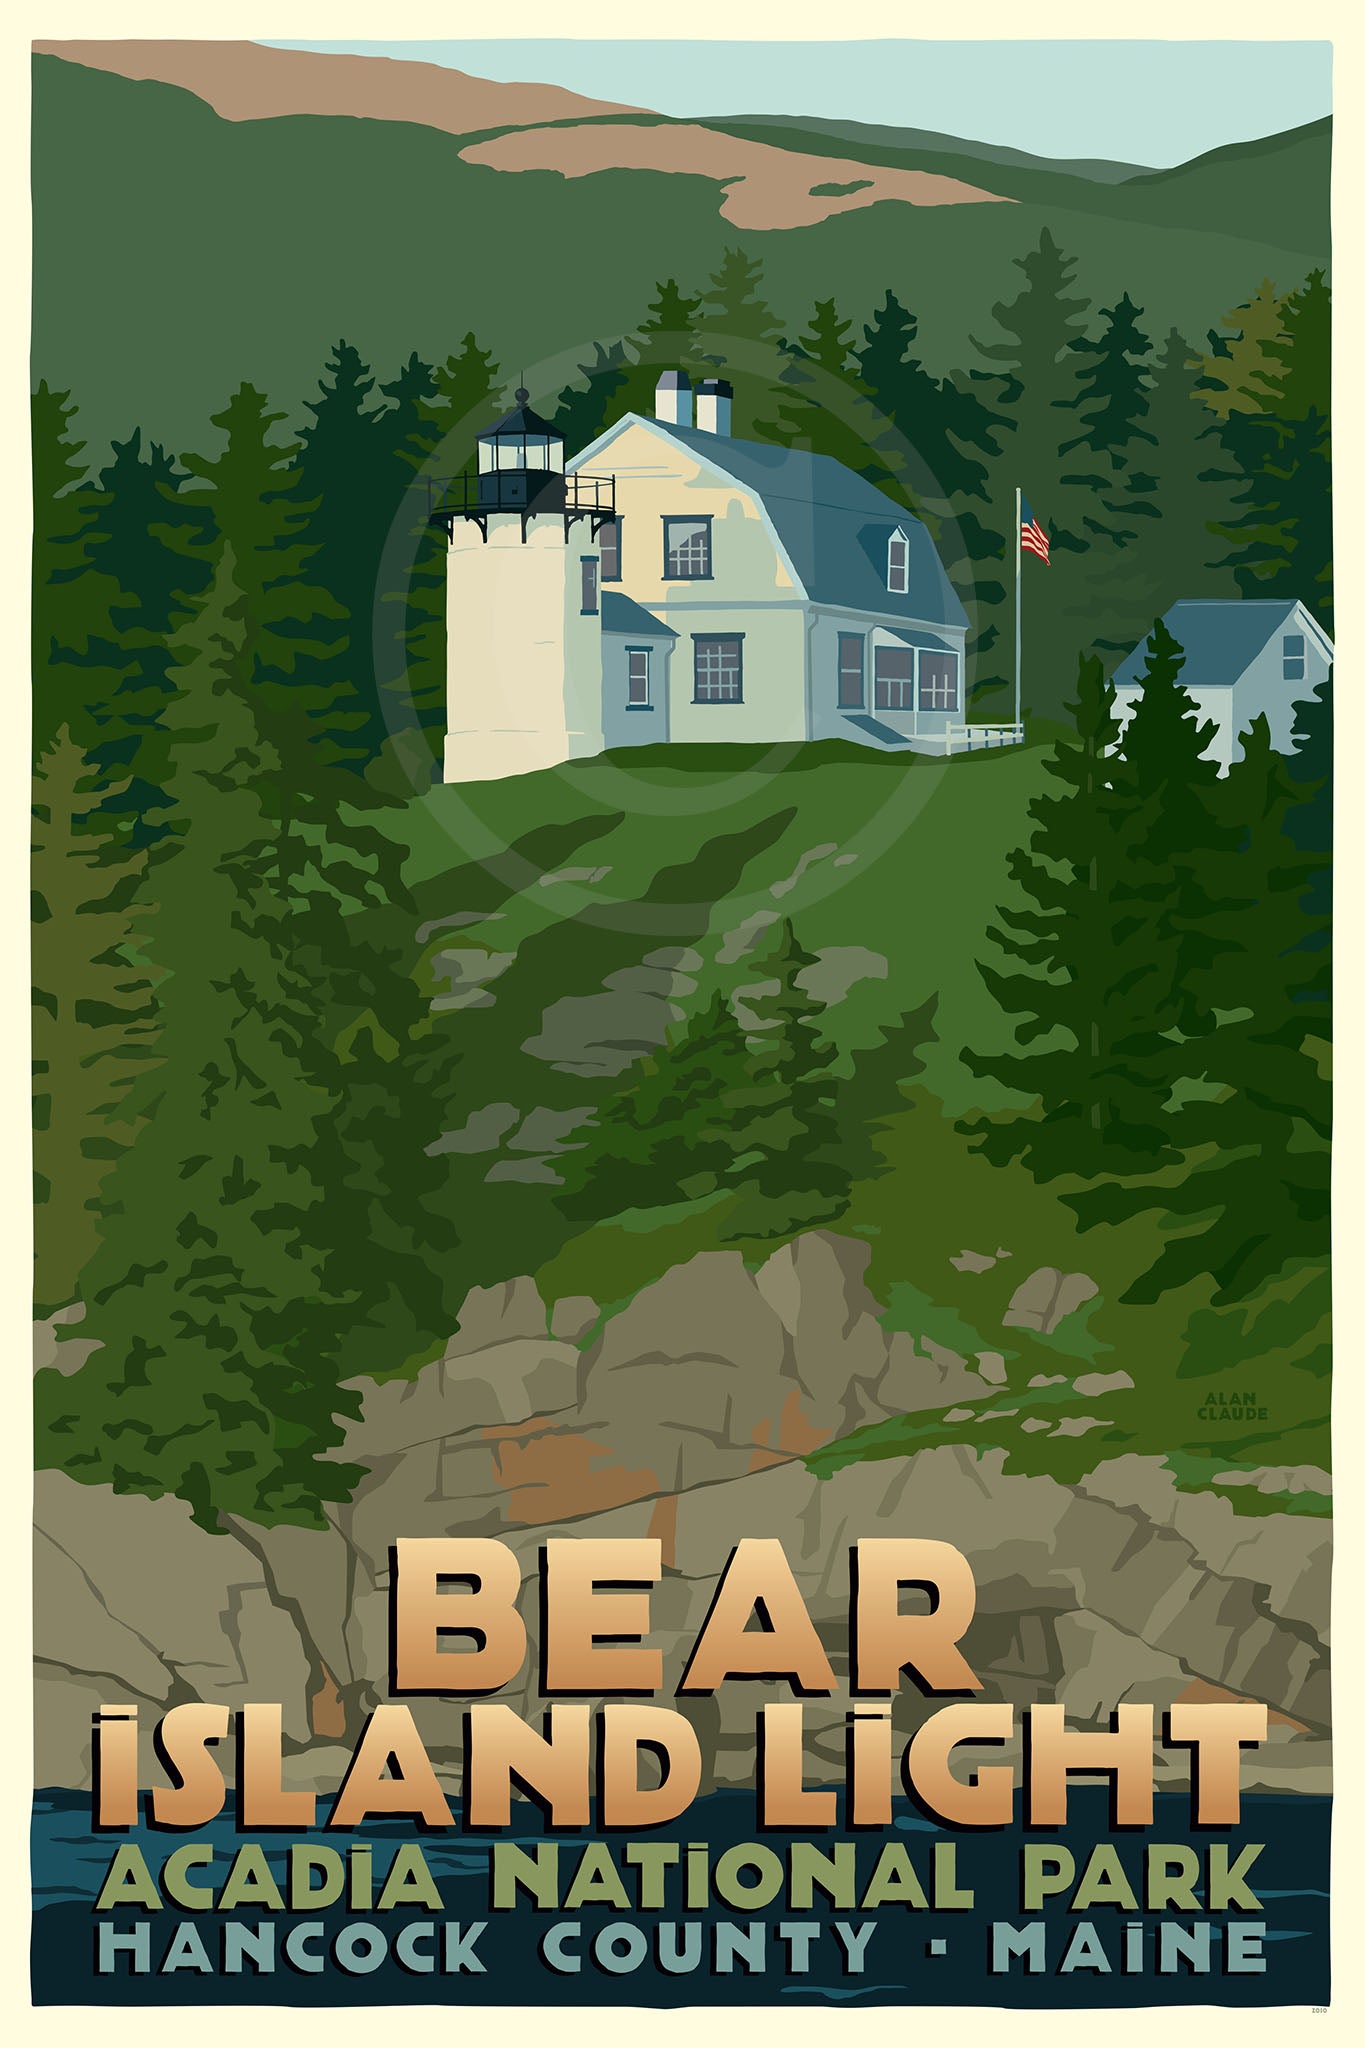 Bear Island Light Art Print 24" x 36" Travel Poster By Alan Claude - Maine